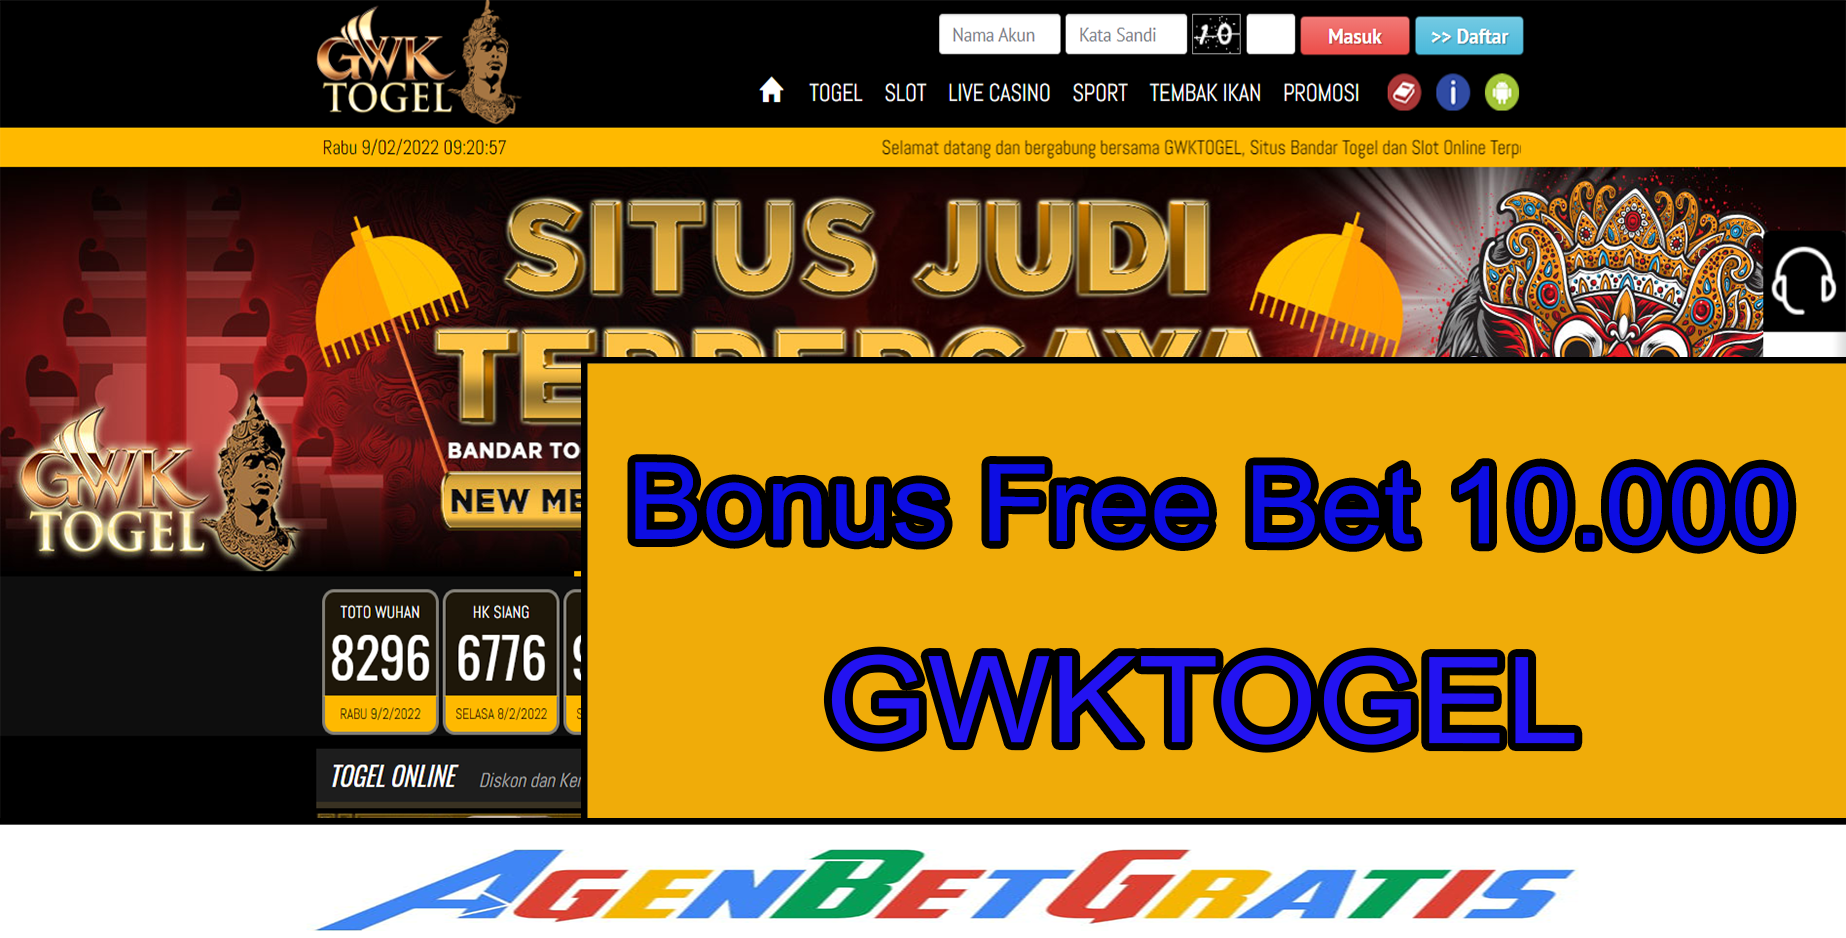 GWKTOGEL - Bonus FreeBet 10.000